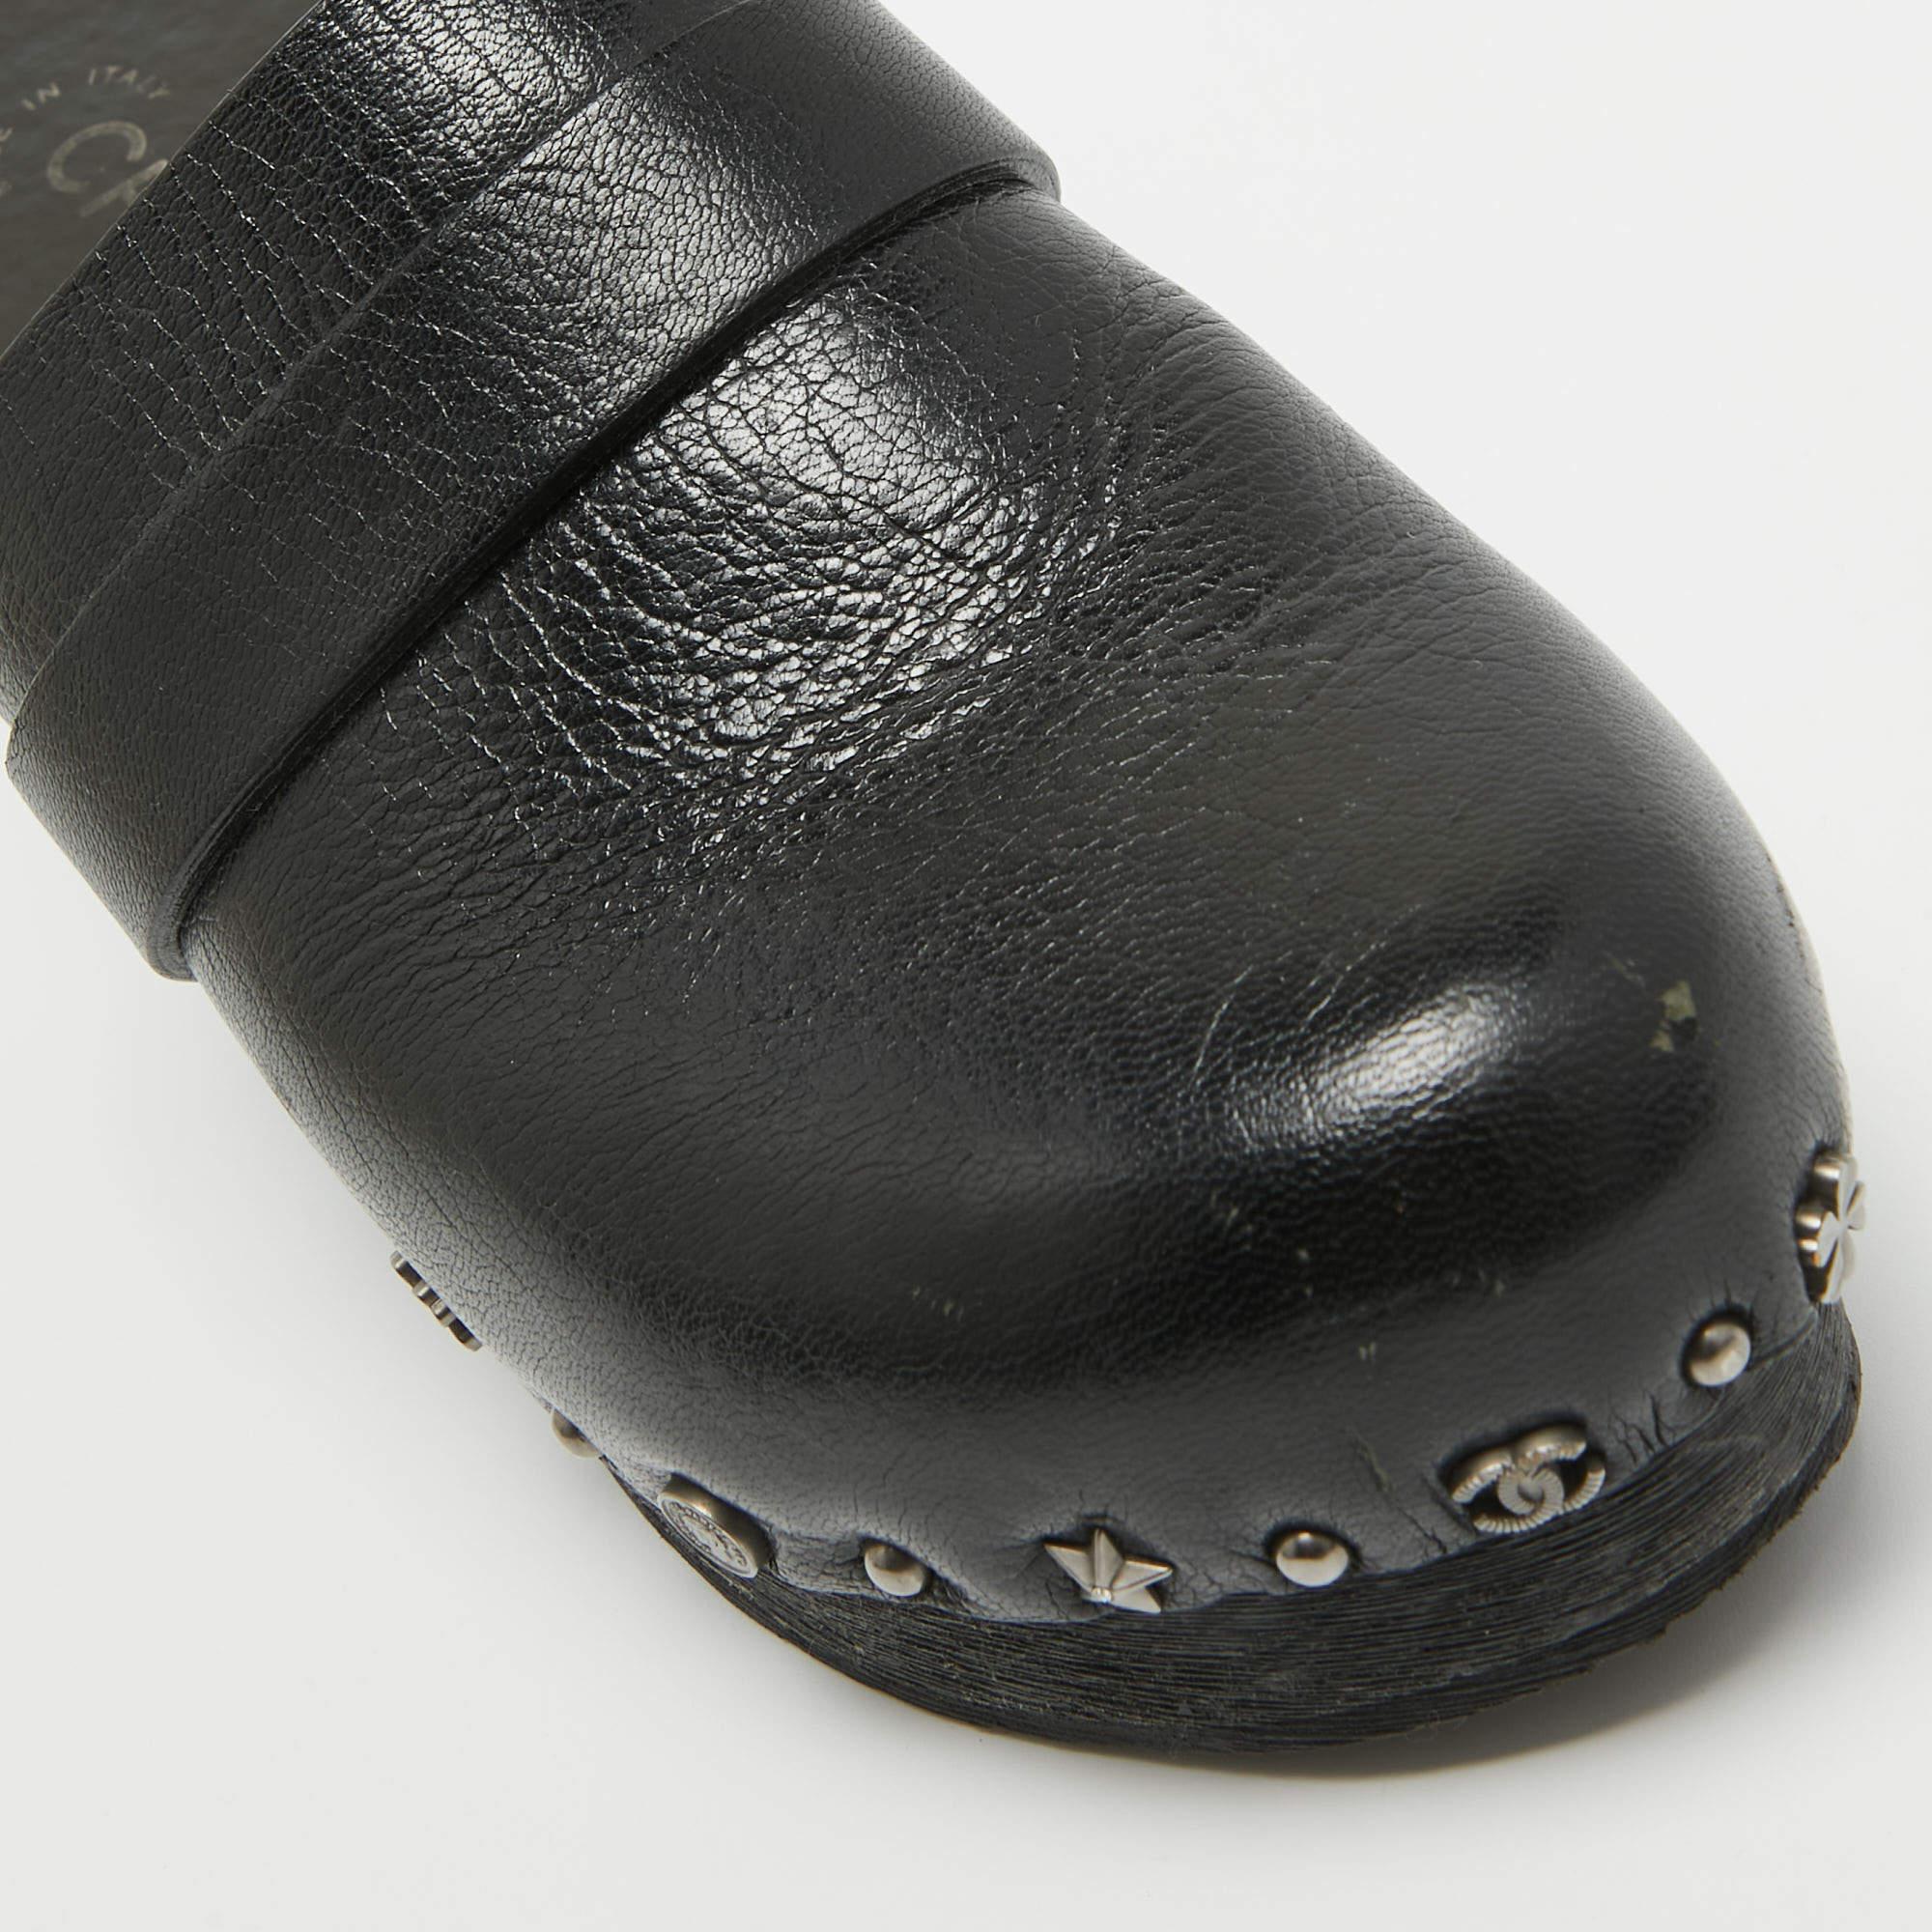 Chanel Black Leather Studded Platform Clogs Size 37 4